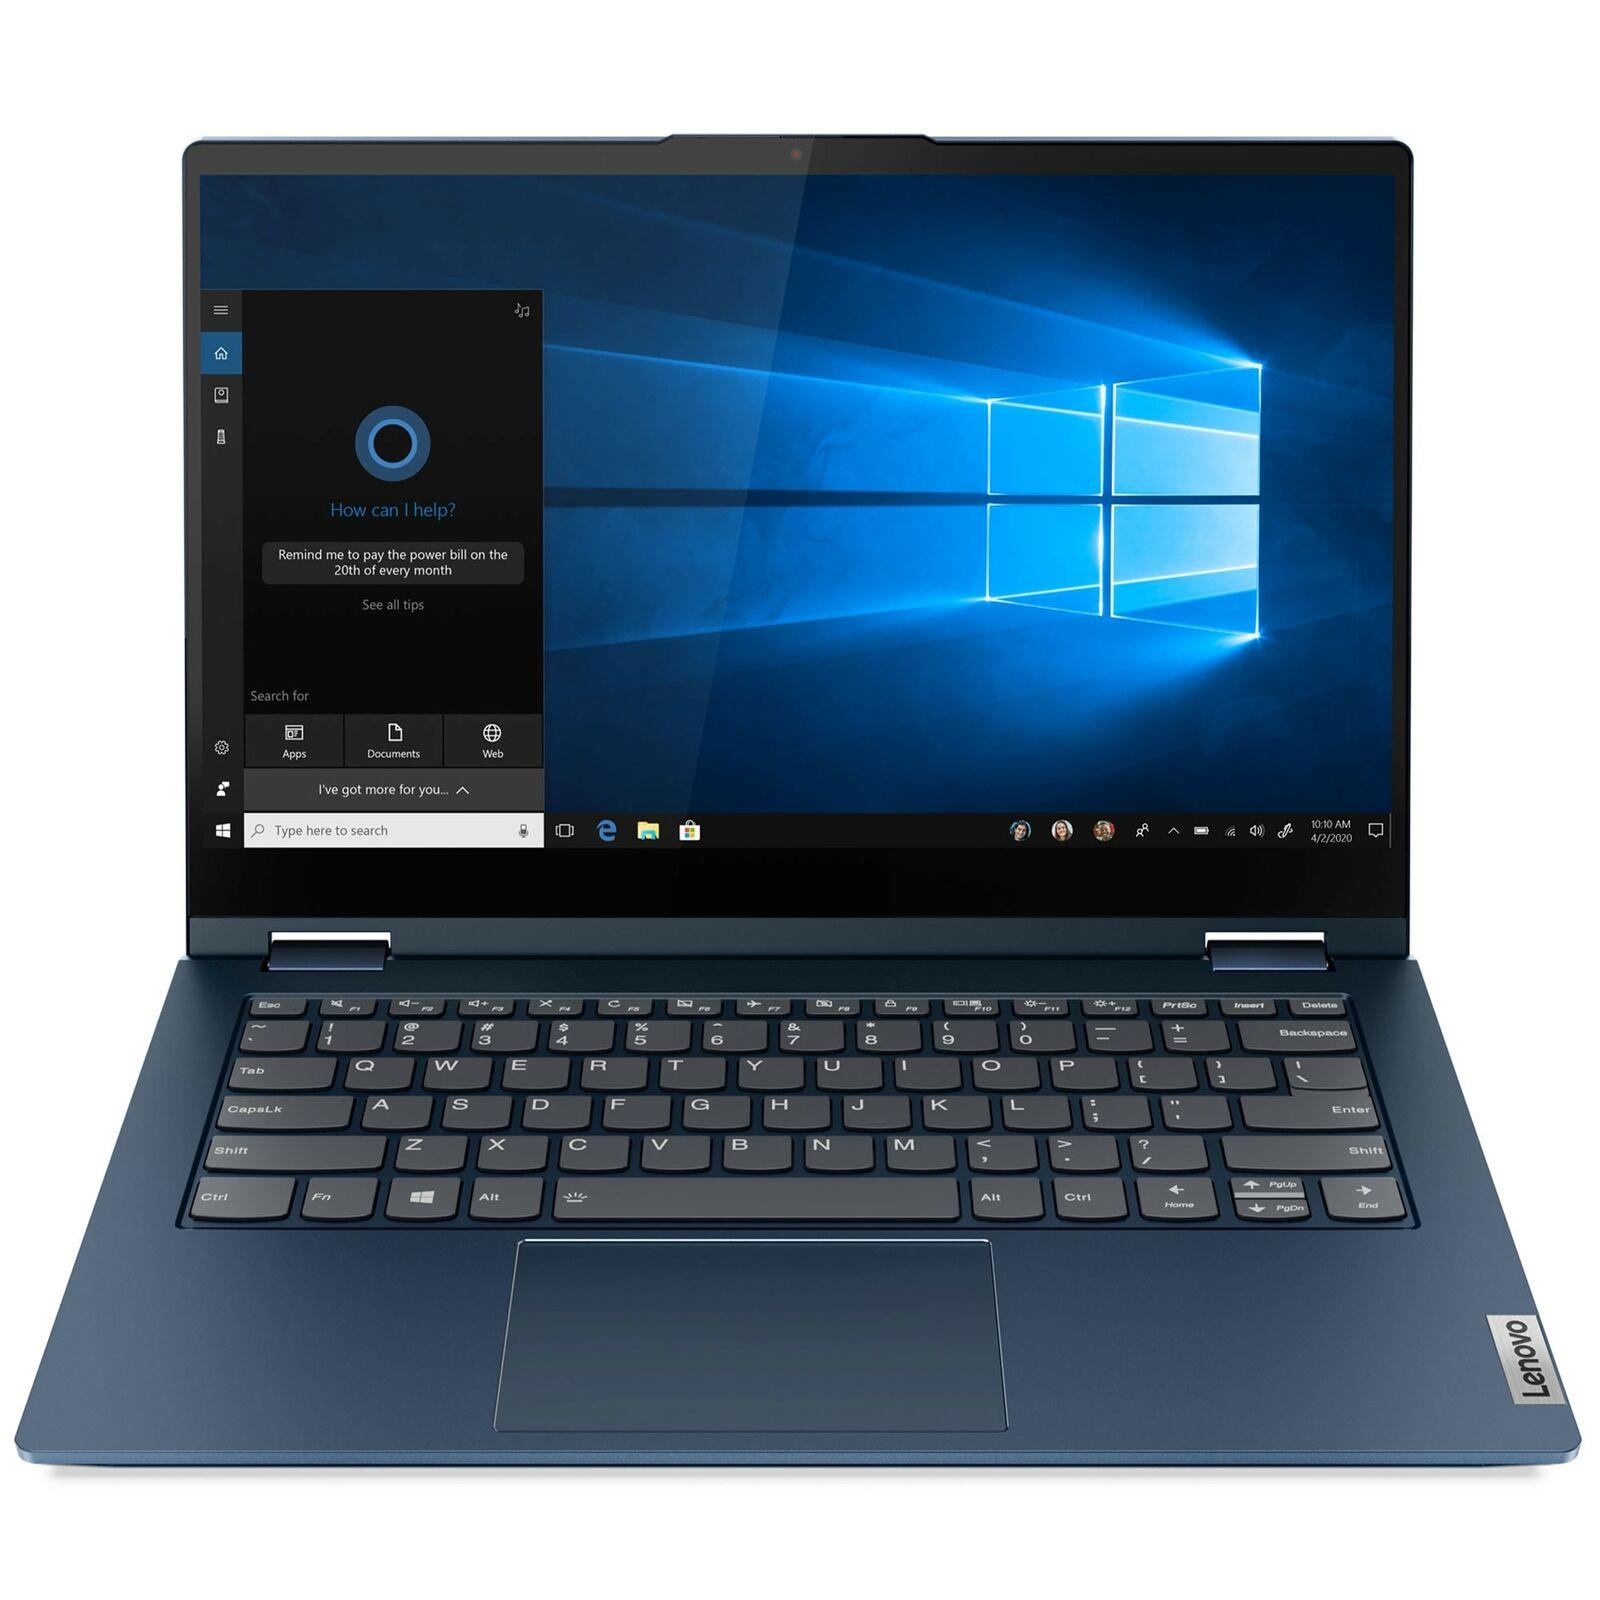 Lenovo ThinkBook 14s i5 8GB 512GB Yoga Laptop for $649.99 Shipped